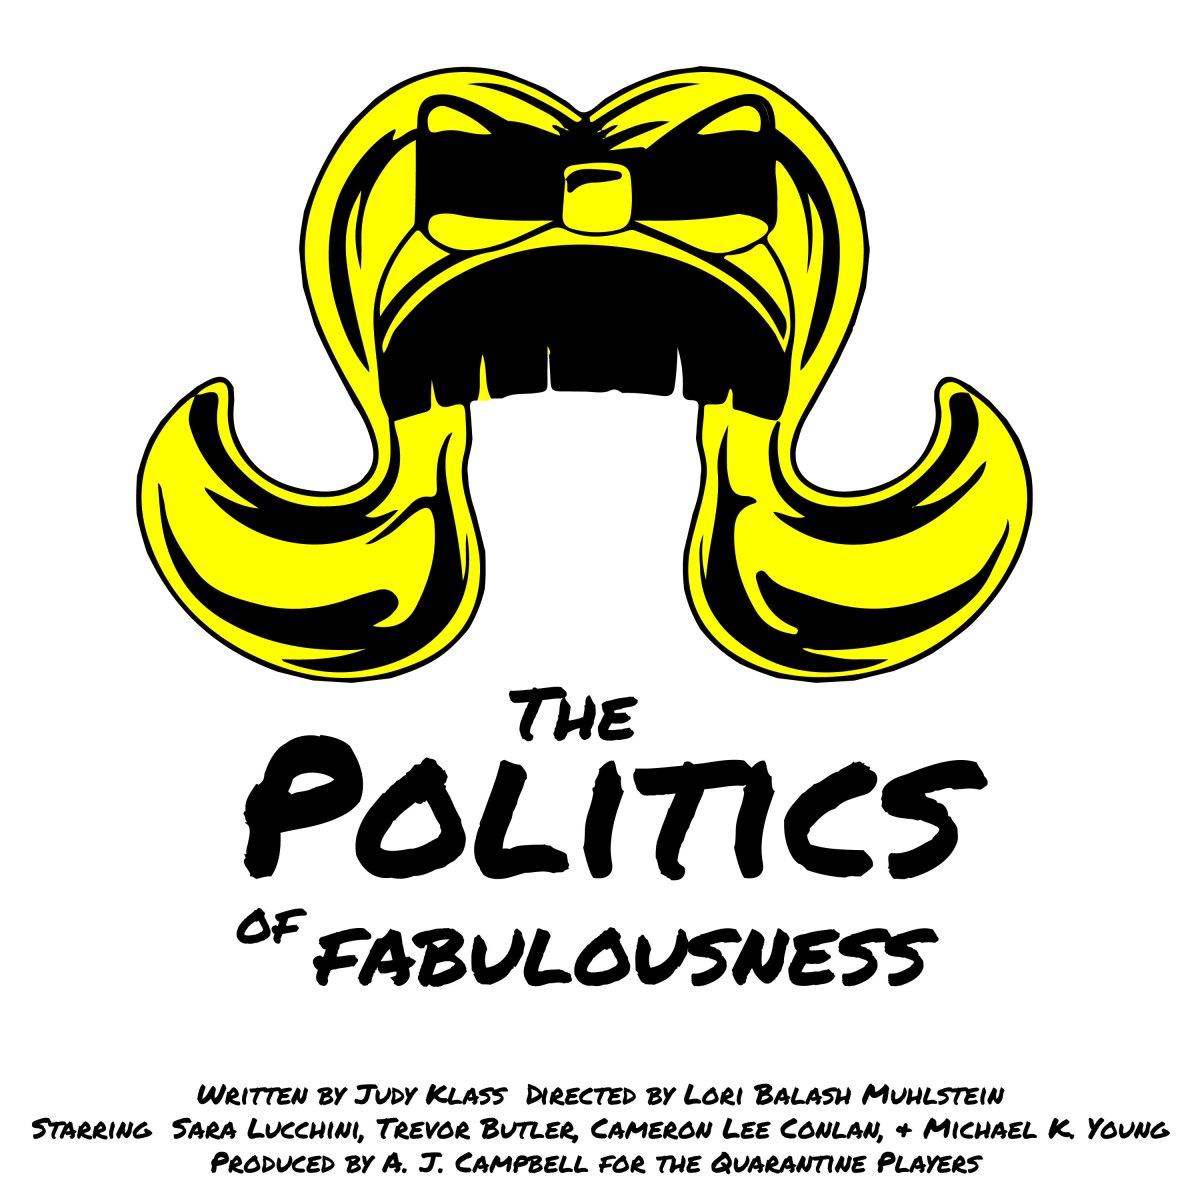 The Politics of Fabulousness by Judy Klass